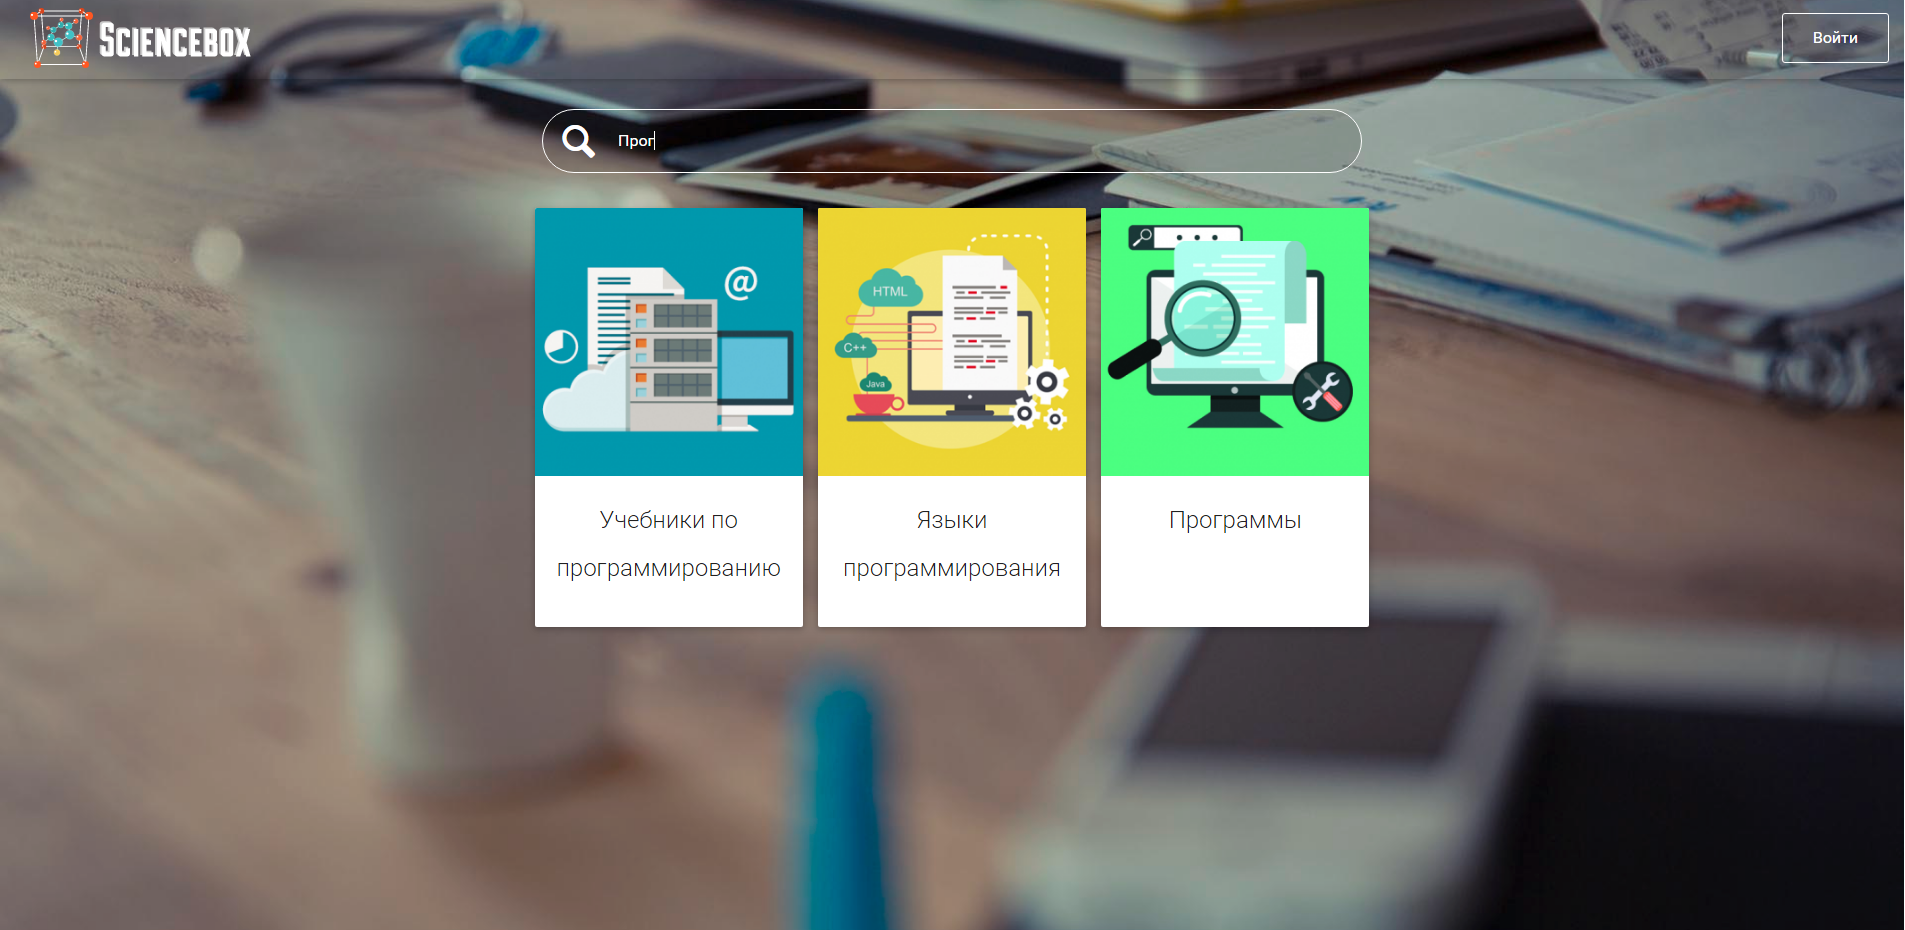 Sciencebox.ru - Бесплатная онлайн база знаний и компетенций открыта